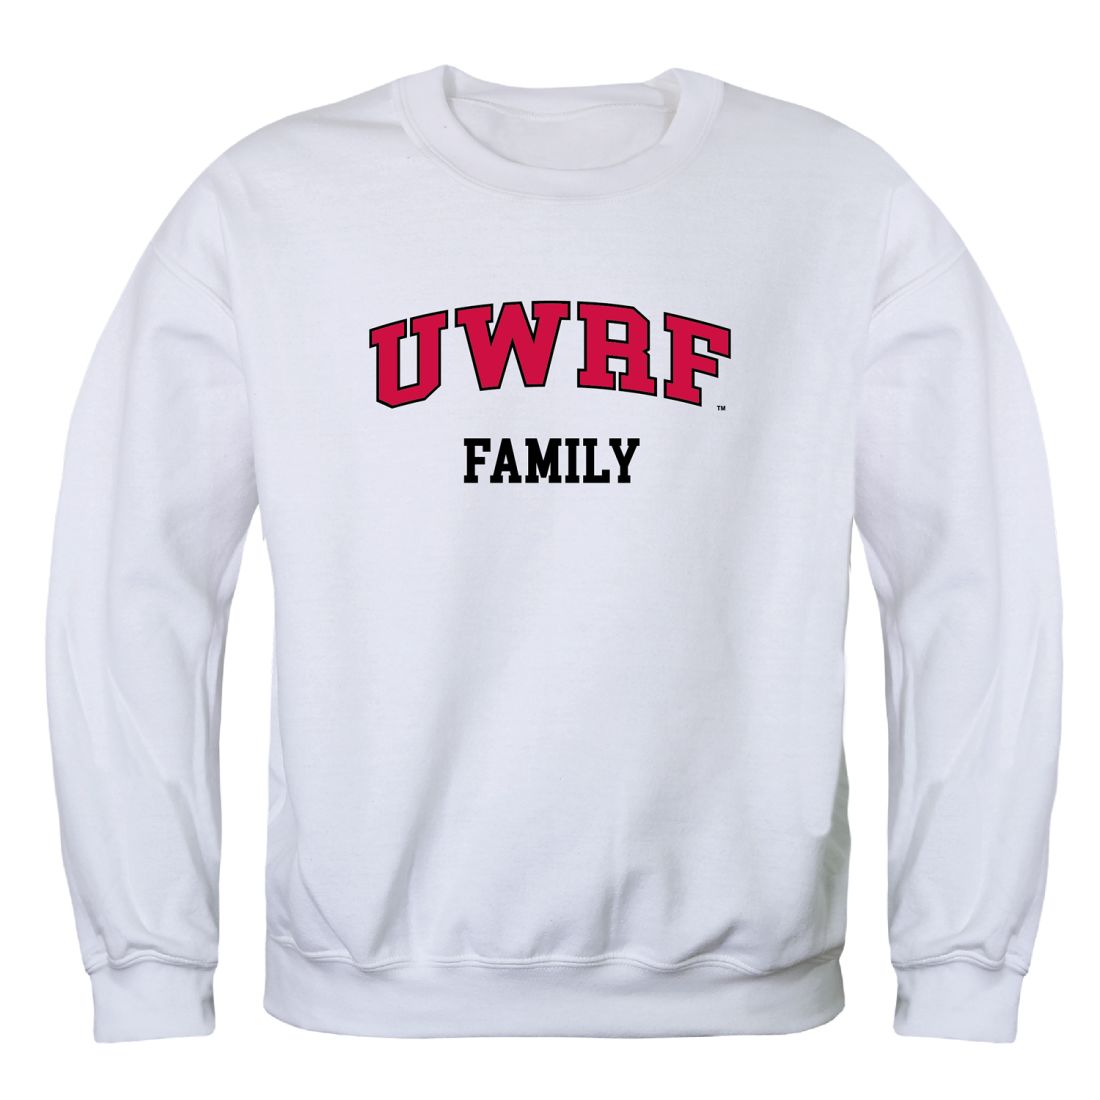 UWRF-University-of-Wisconsin-River-Falls-Falcons-Family-Fleece-Crewneck-Pullover-Sweatshirt